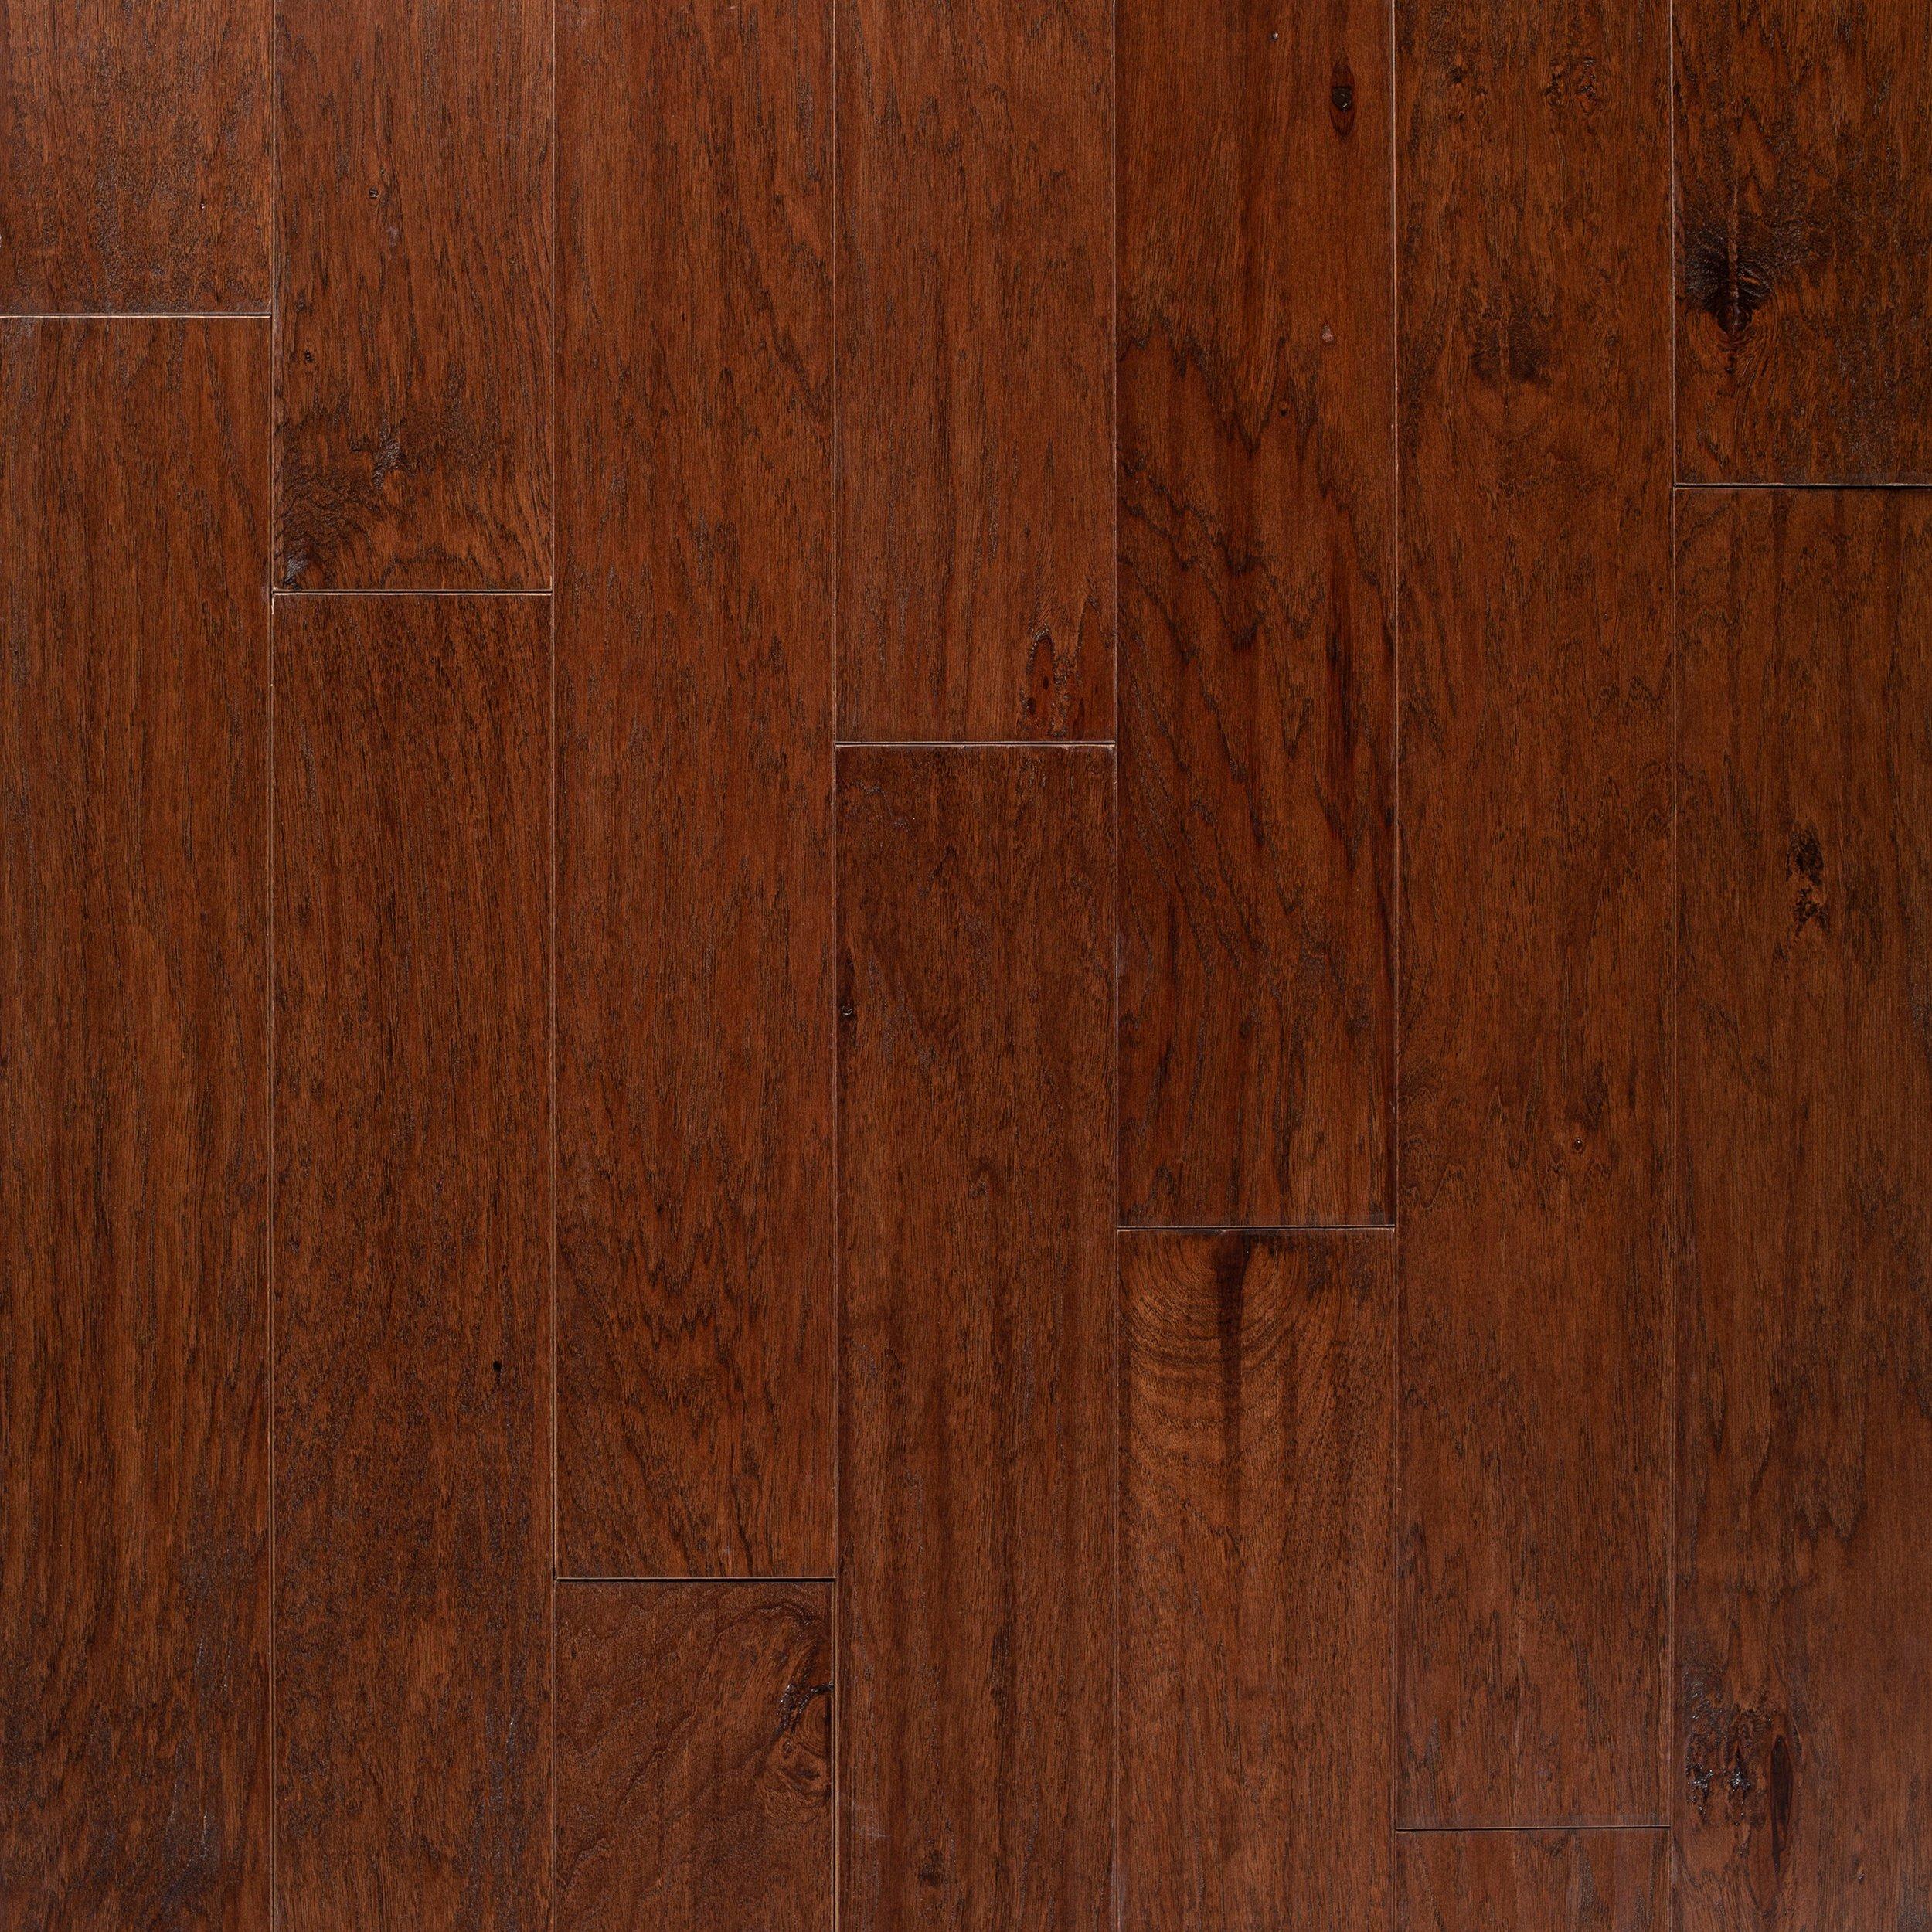 Cambridge Hickory Ii Hand Sed, Floor And Decor Hardwood Flooring